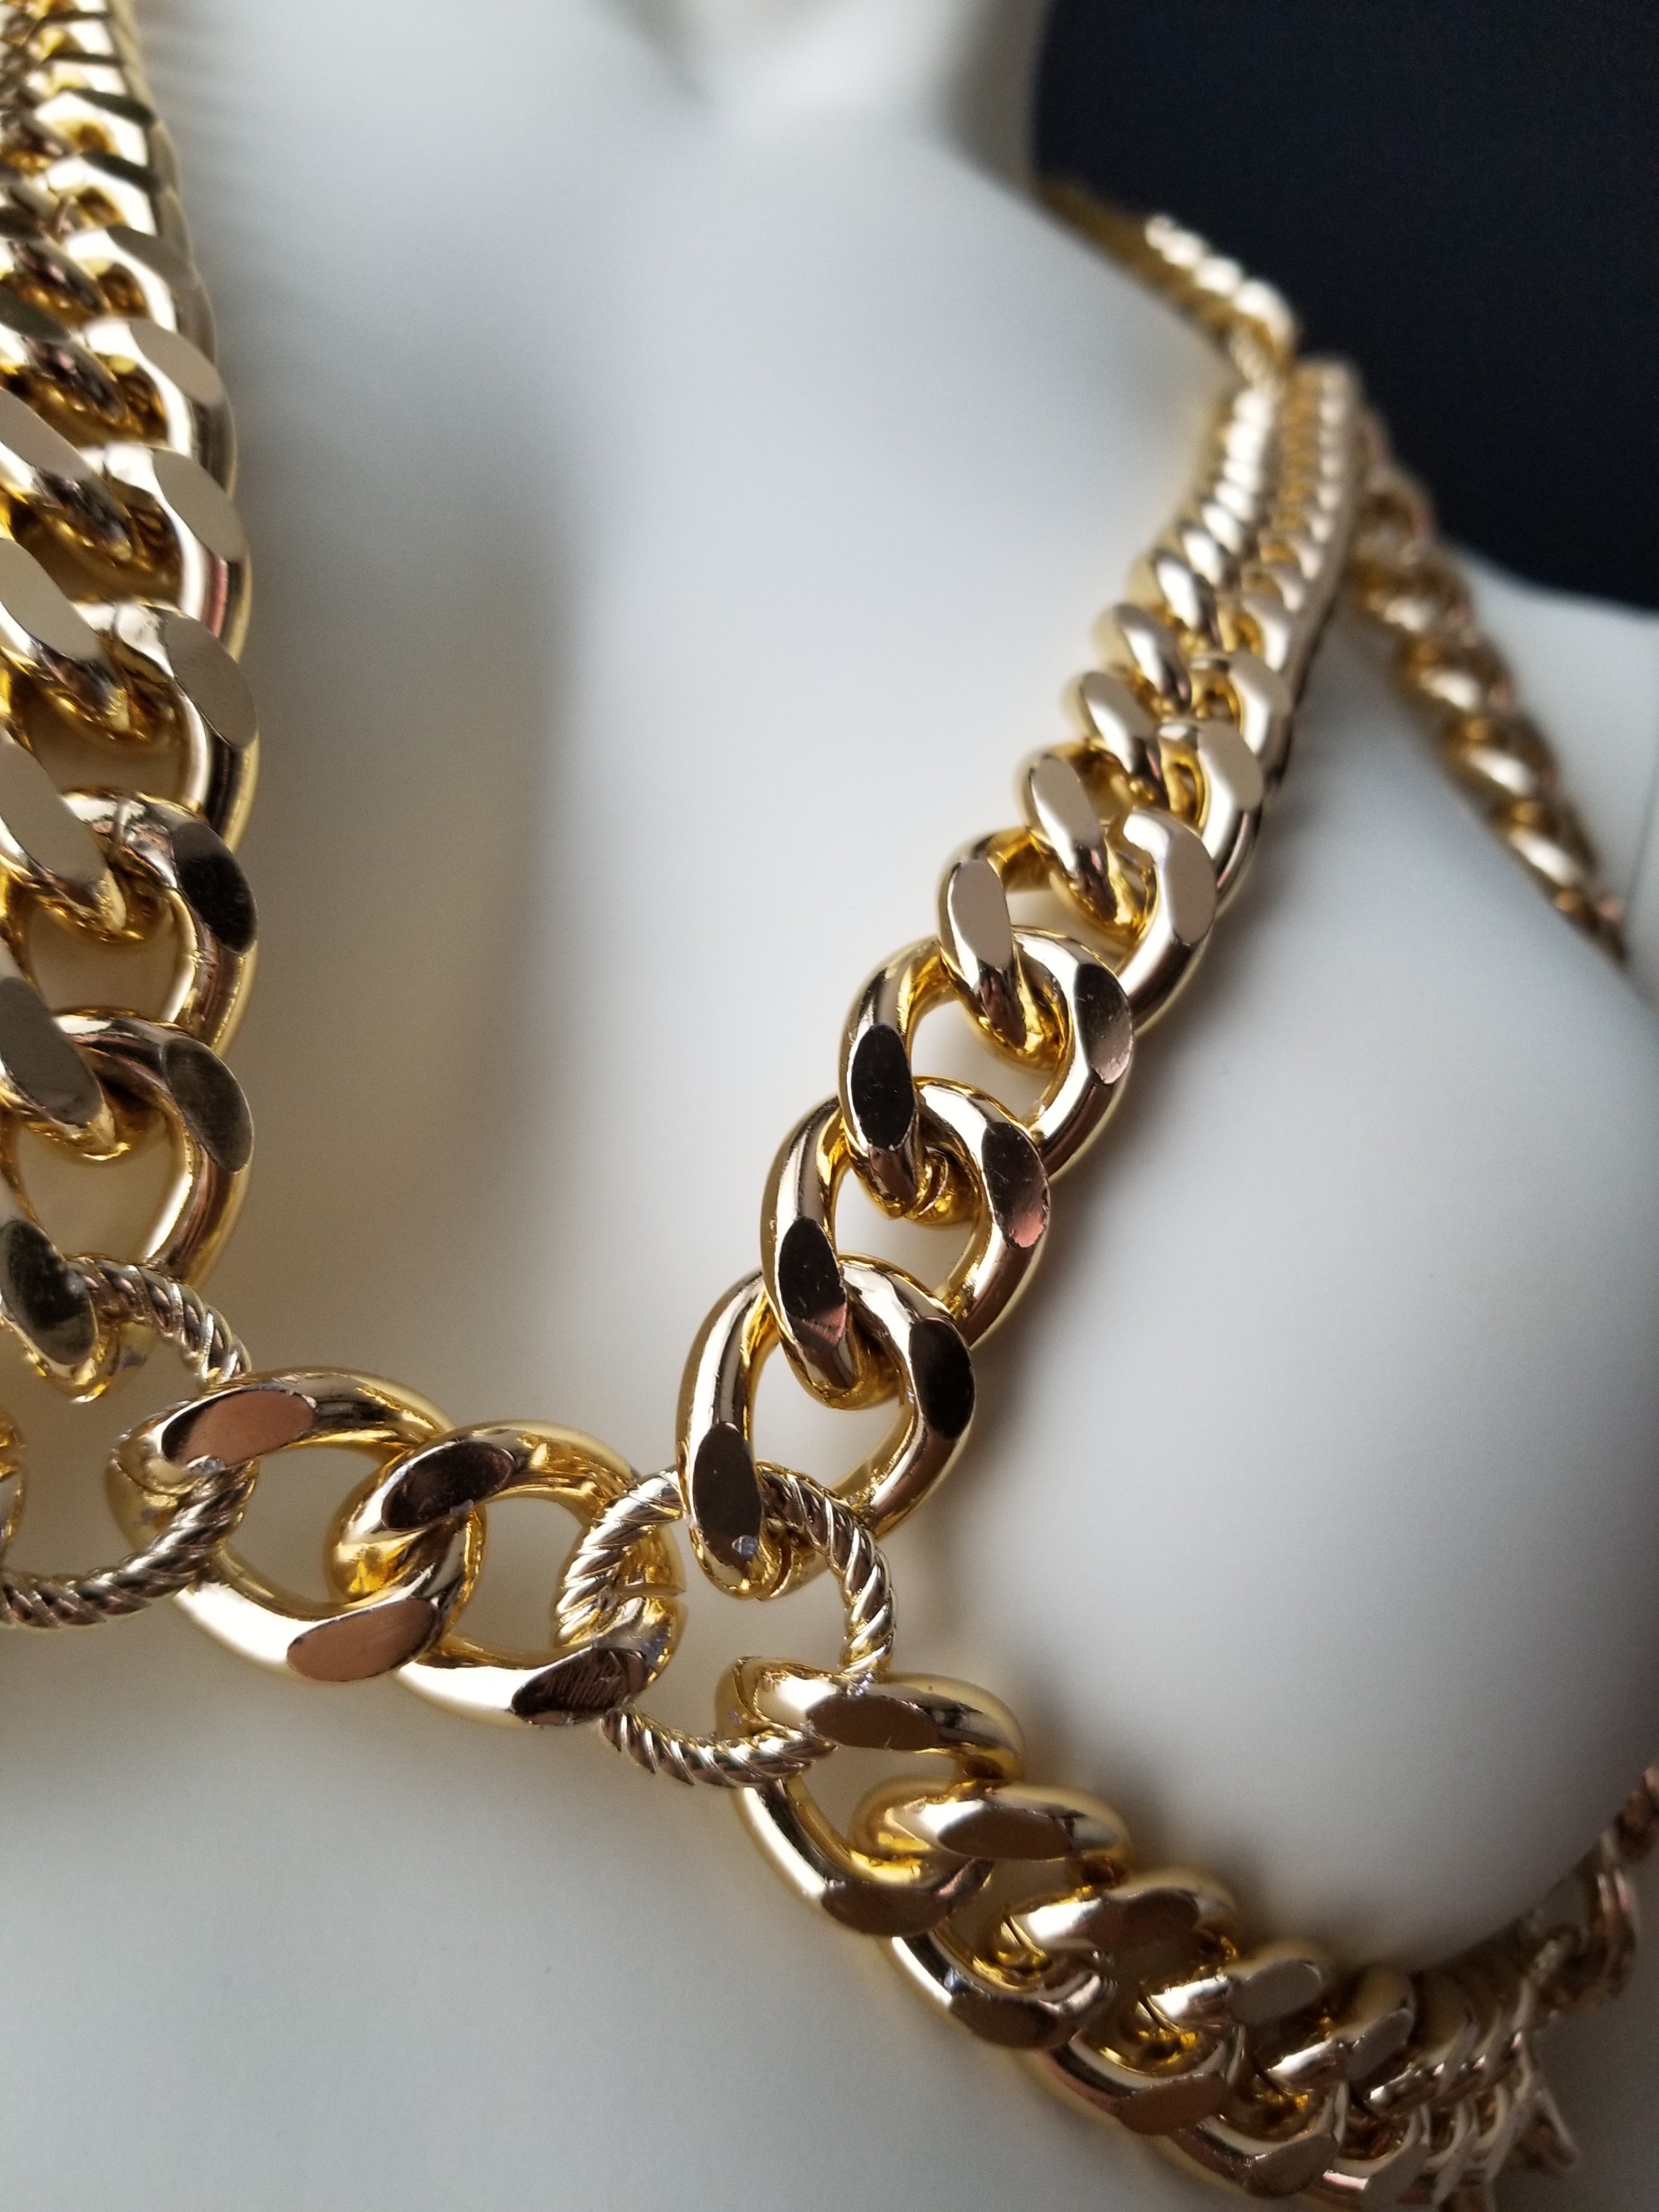 14k Gold Filled Dainty Chain Bralette Halter Top Body Chain Chain